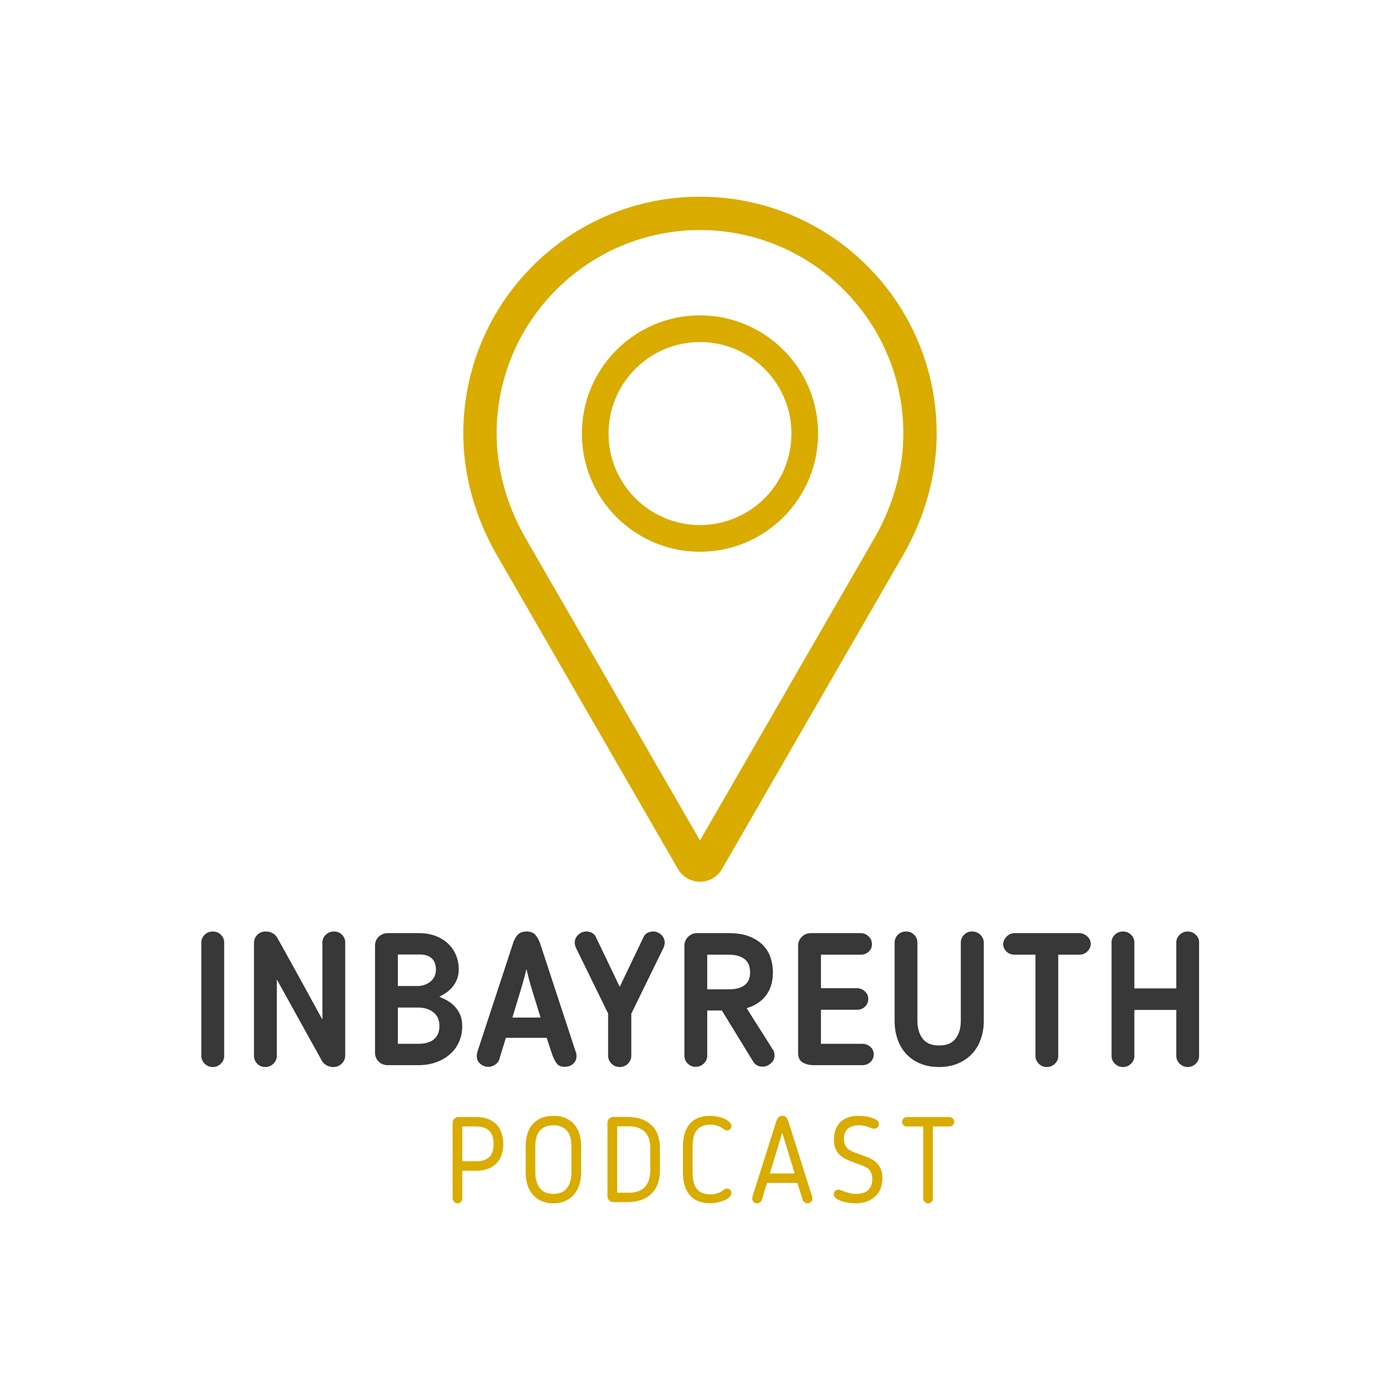 inbayreuth Podcast - Der Bayreuth-Podcast